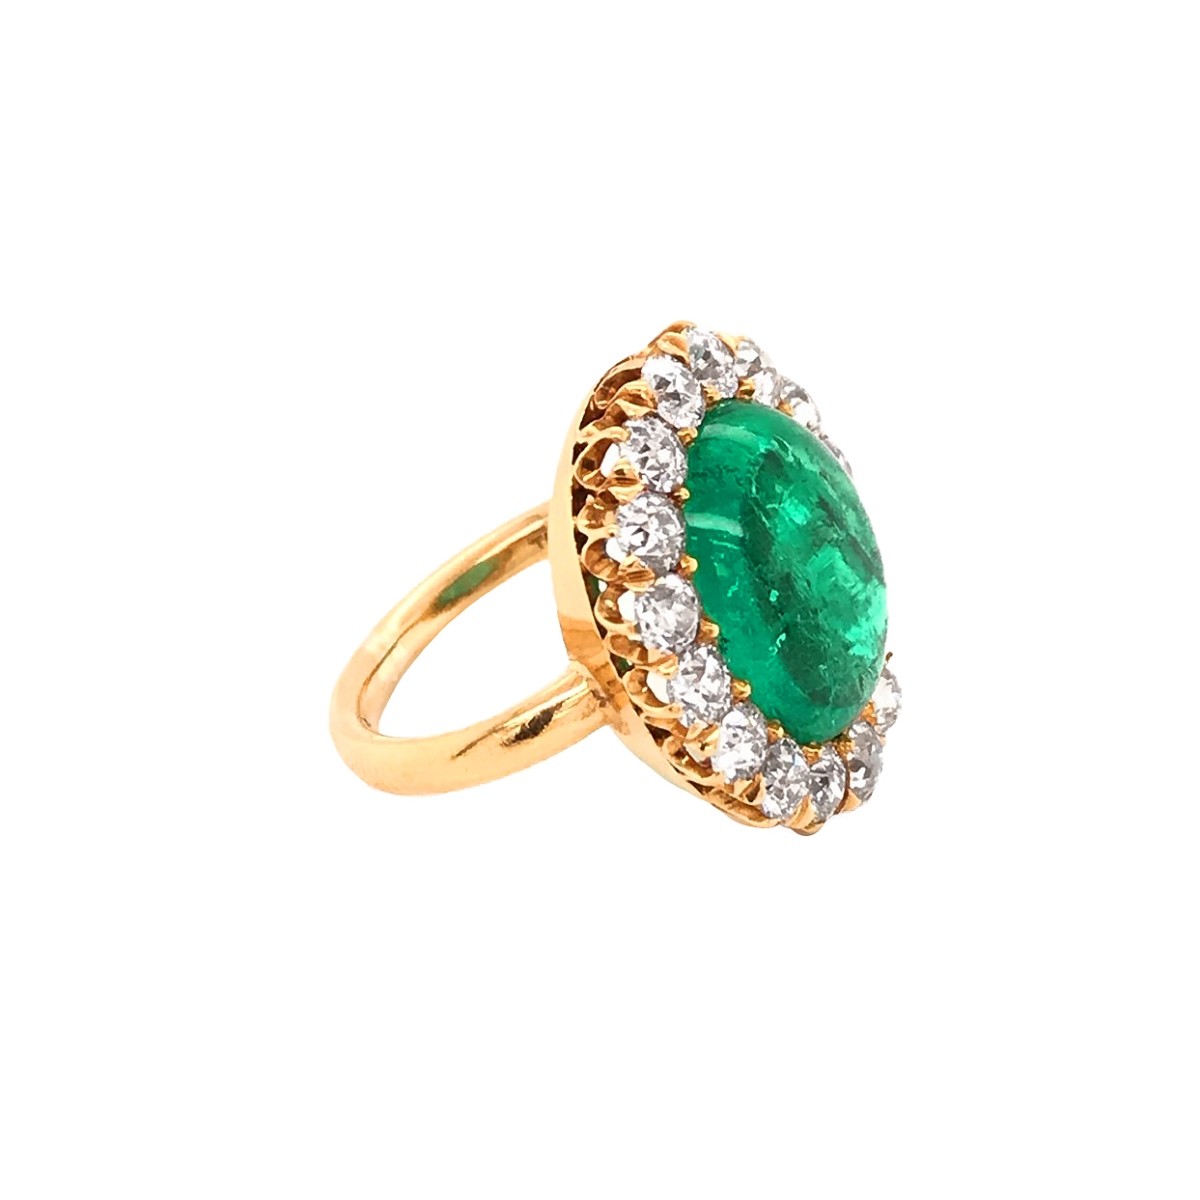 Tiffany & Co Emerald, Diamond and 18K Ring